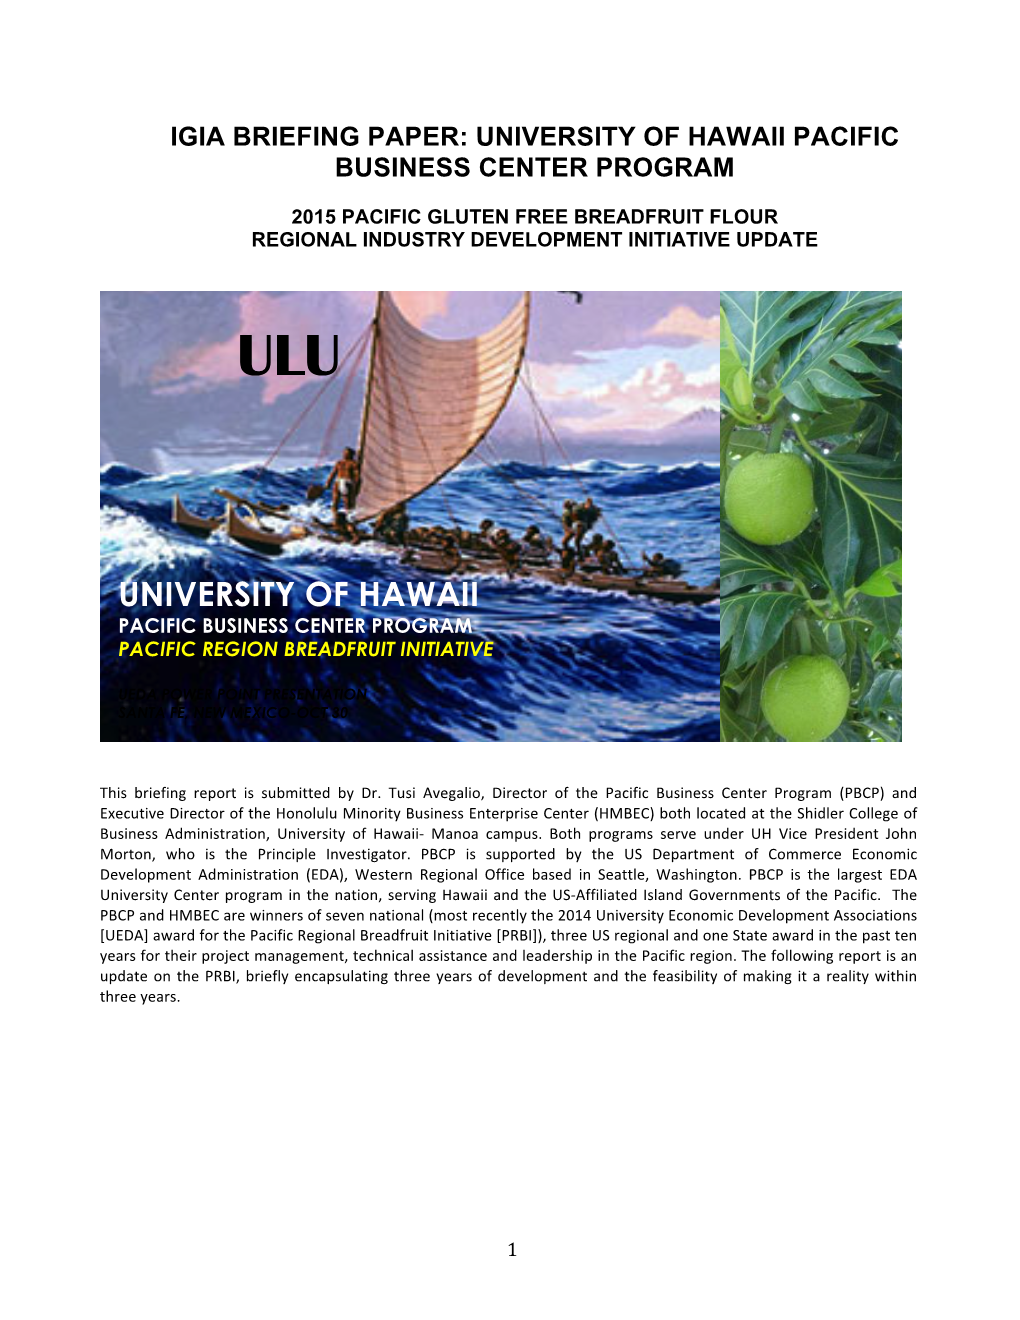 University of Hawaii Pacific Business Center Program